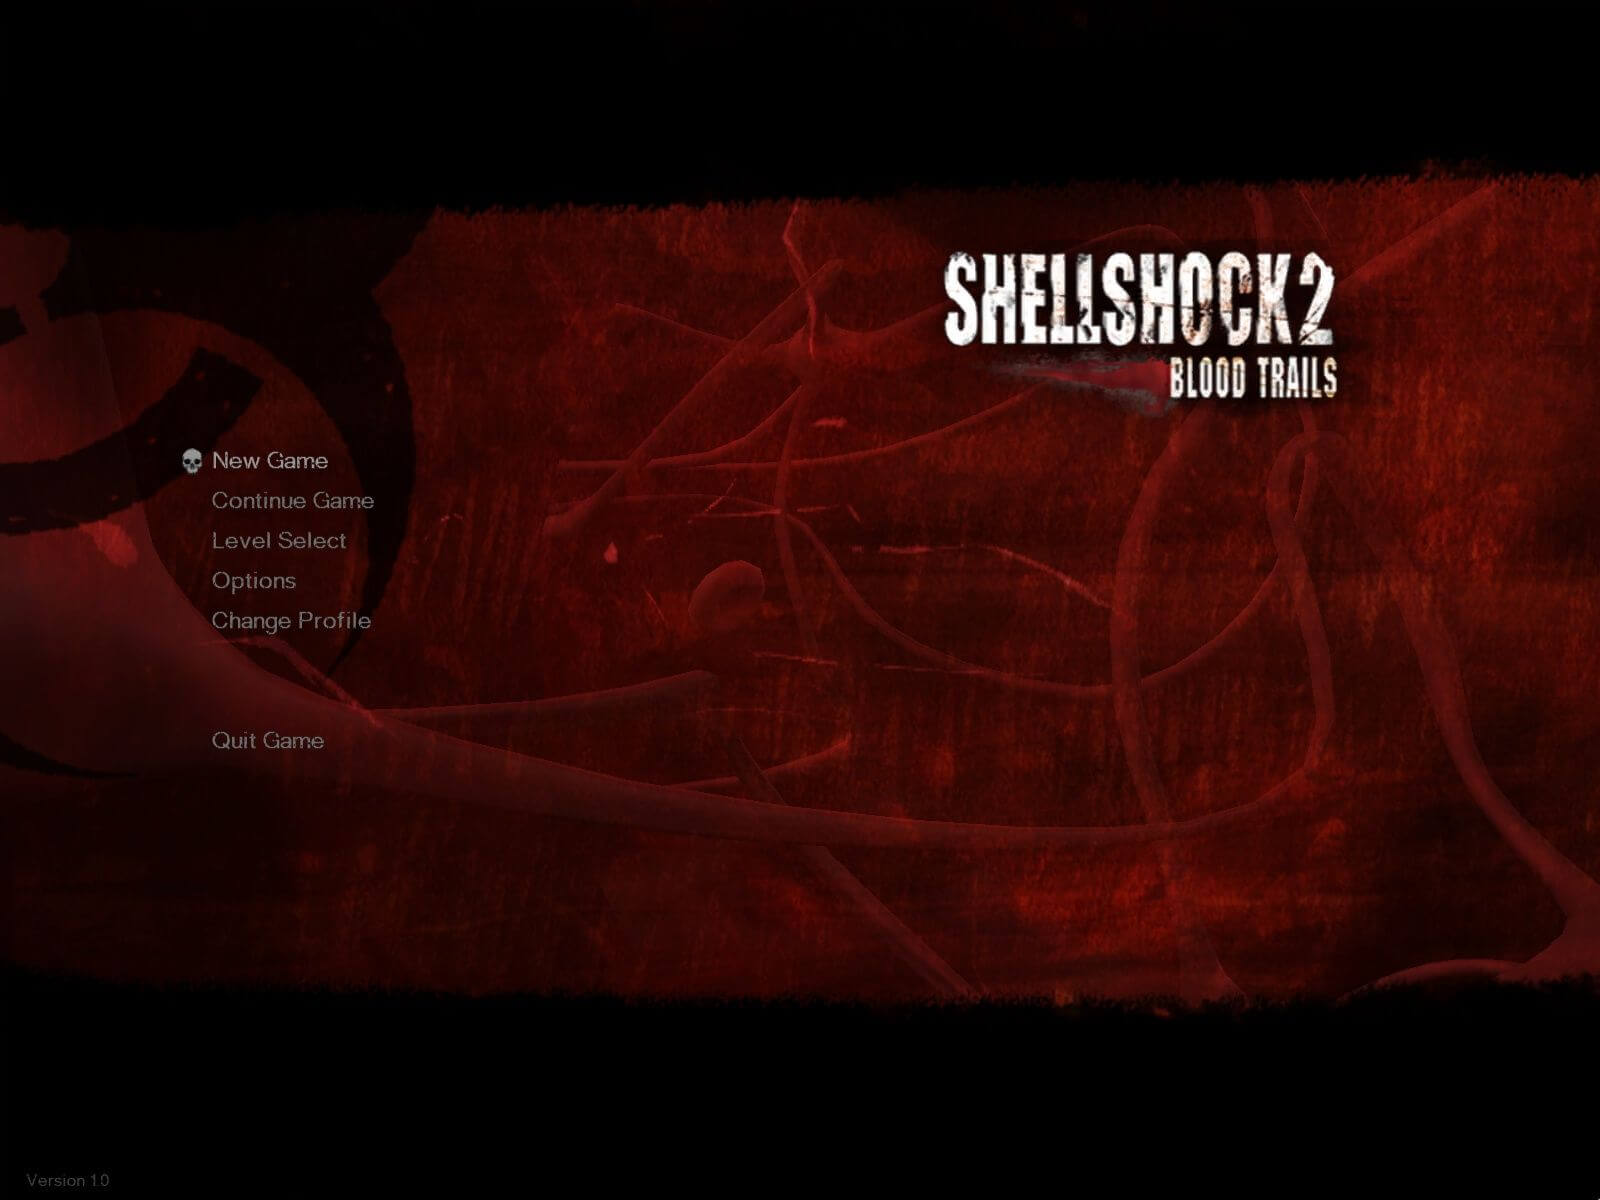 Shellshock 2 Blood Trails - PC